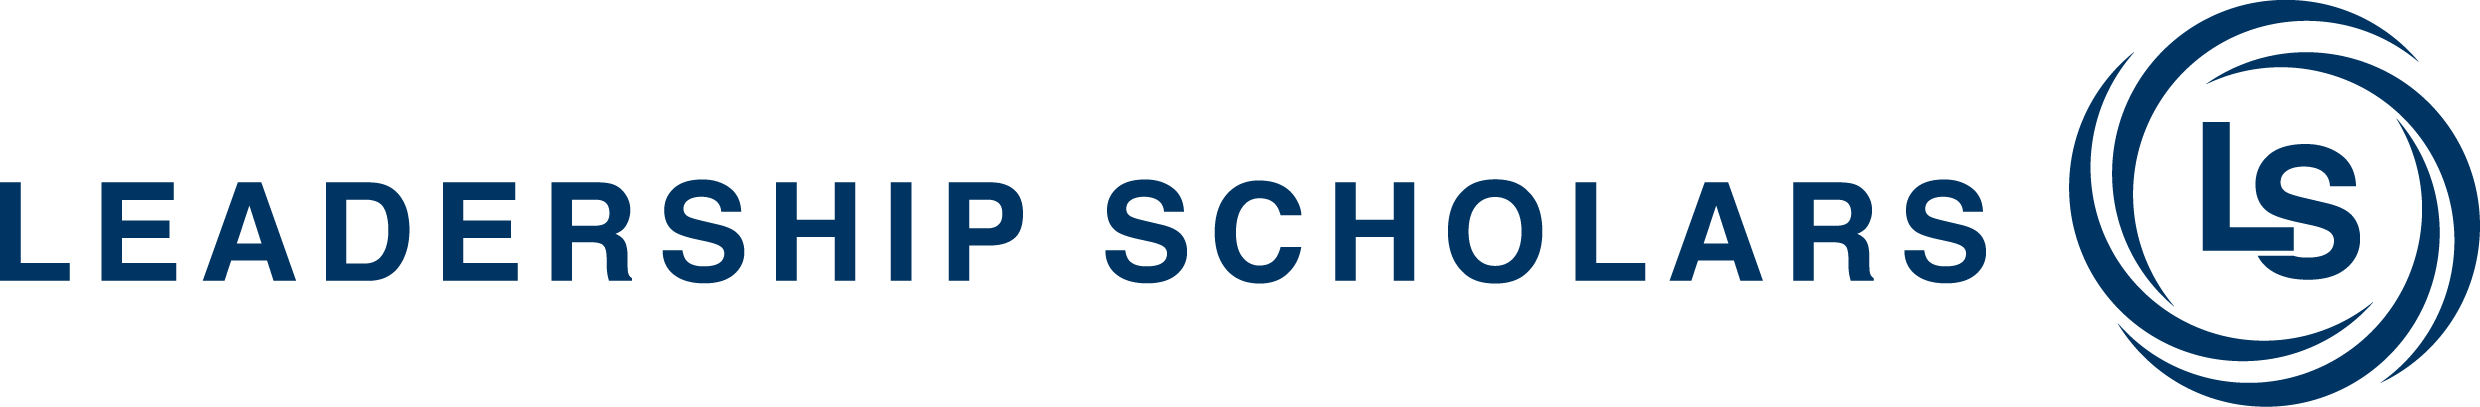 Leadership Scholars Logo